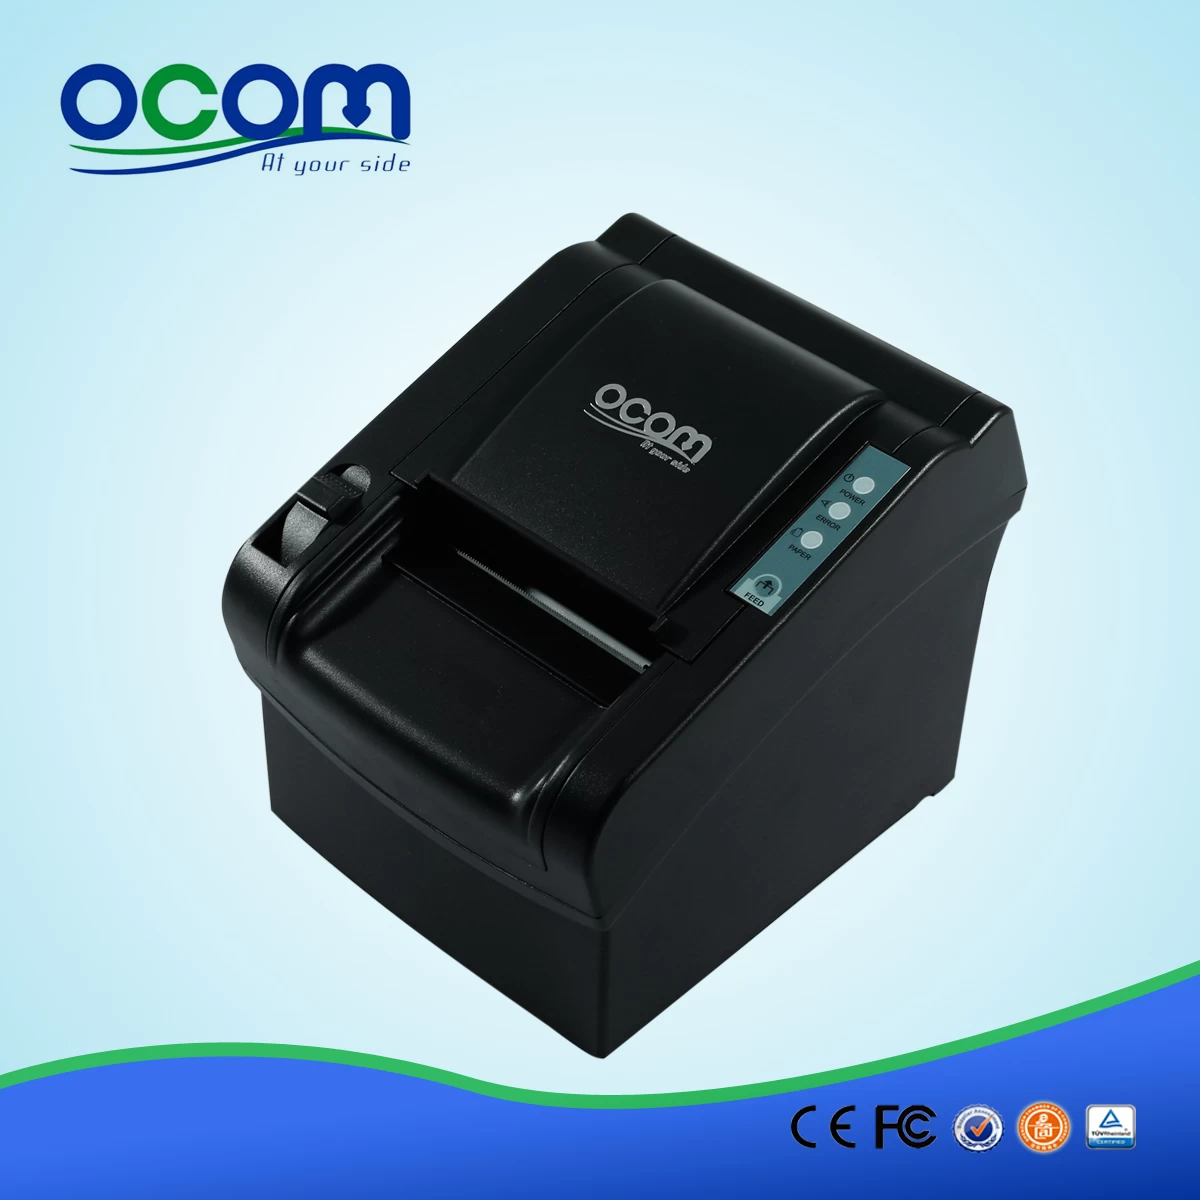 80mm classic thermal receipt printer-OCPP-802